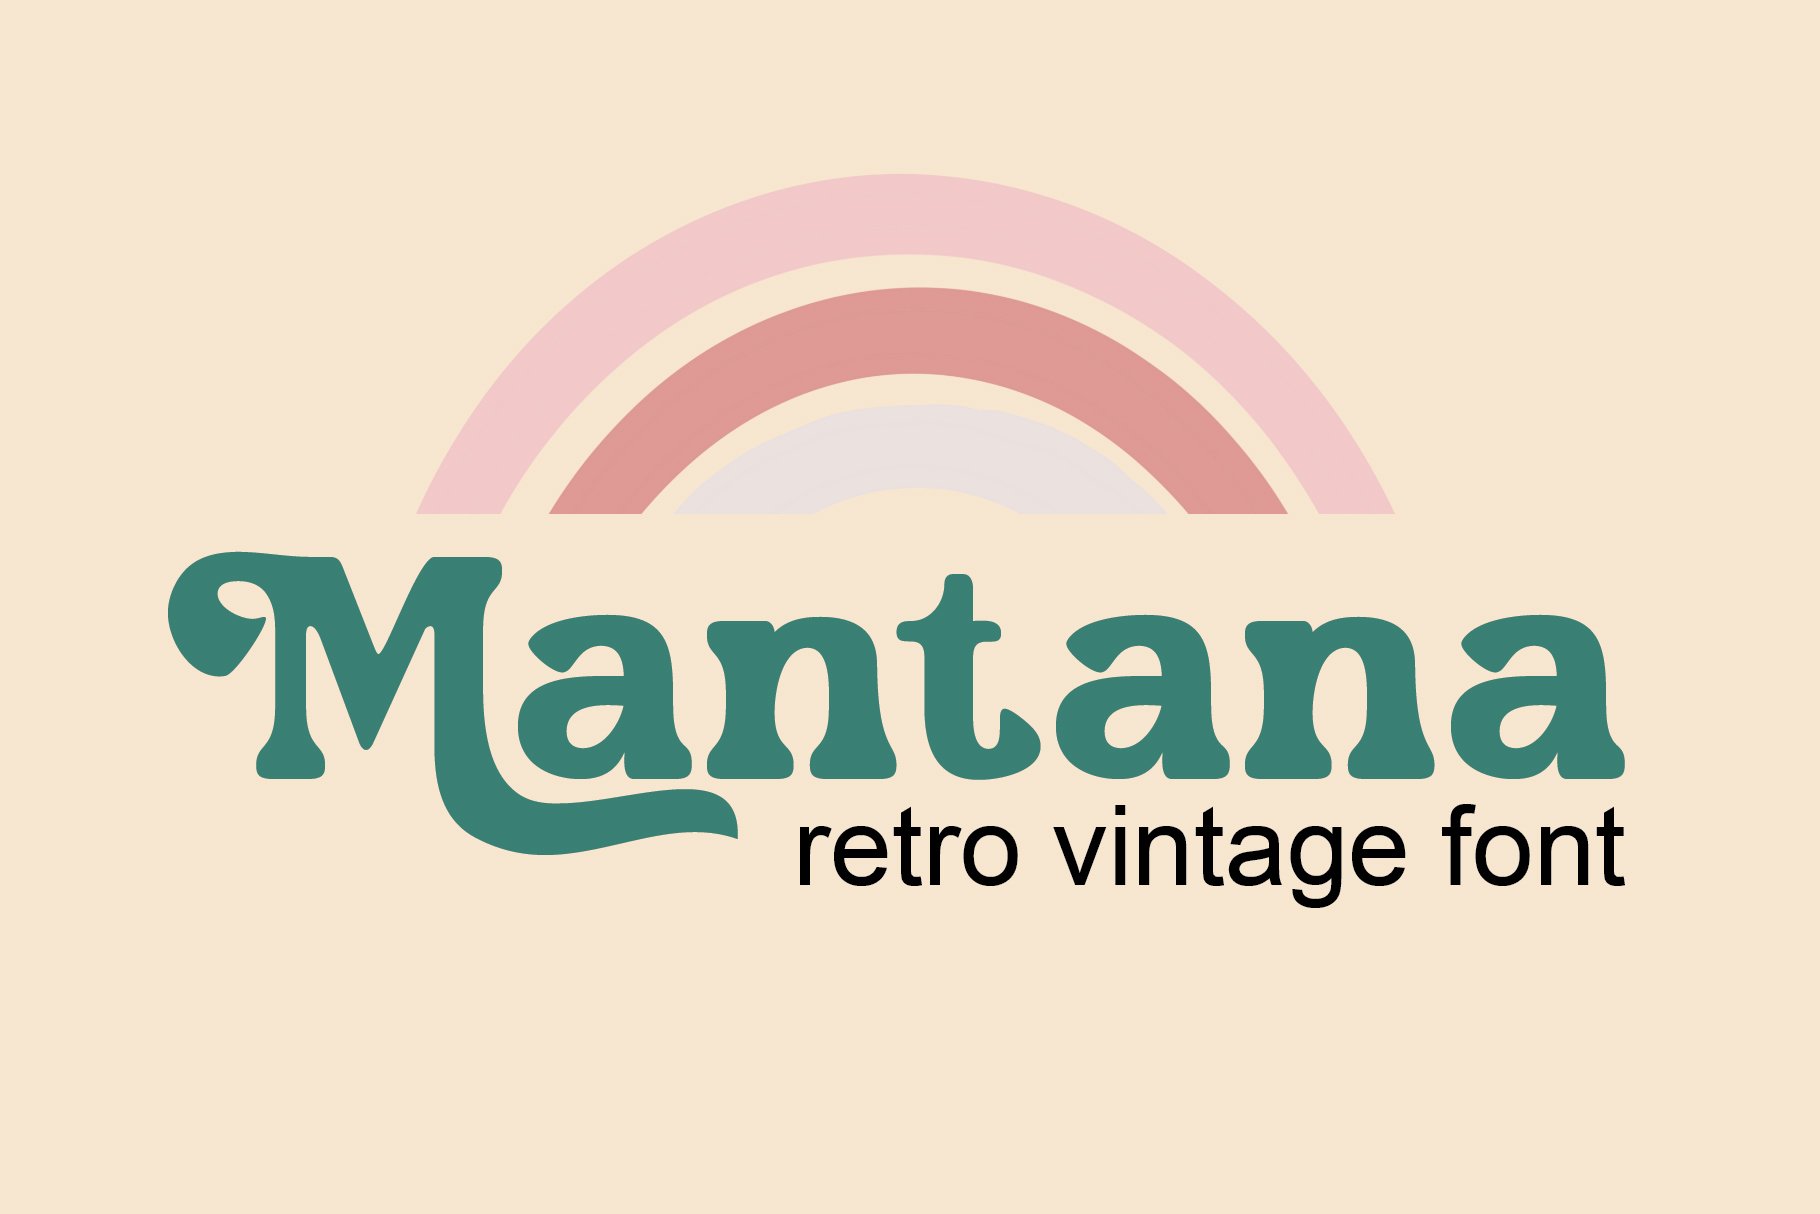 Mantana - Retro Vintage DIsplay font cover image.